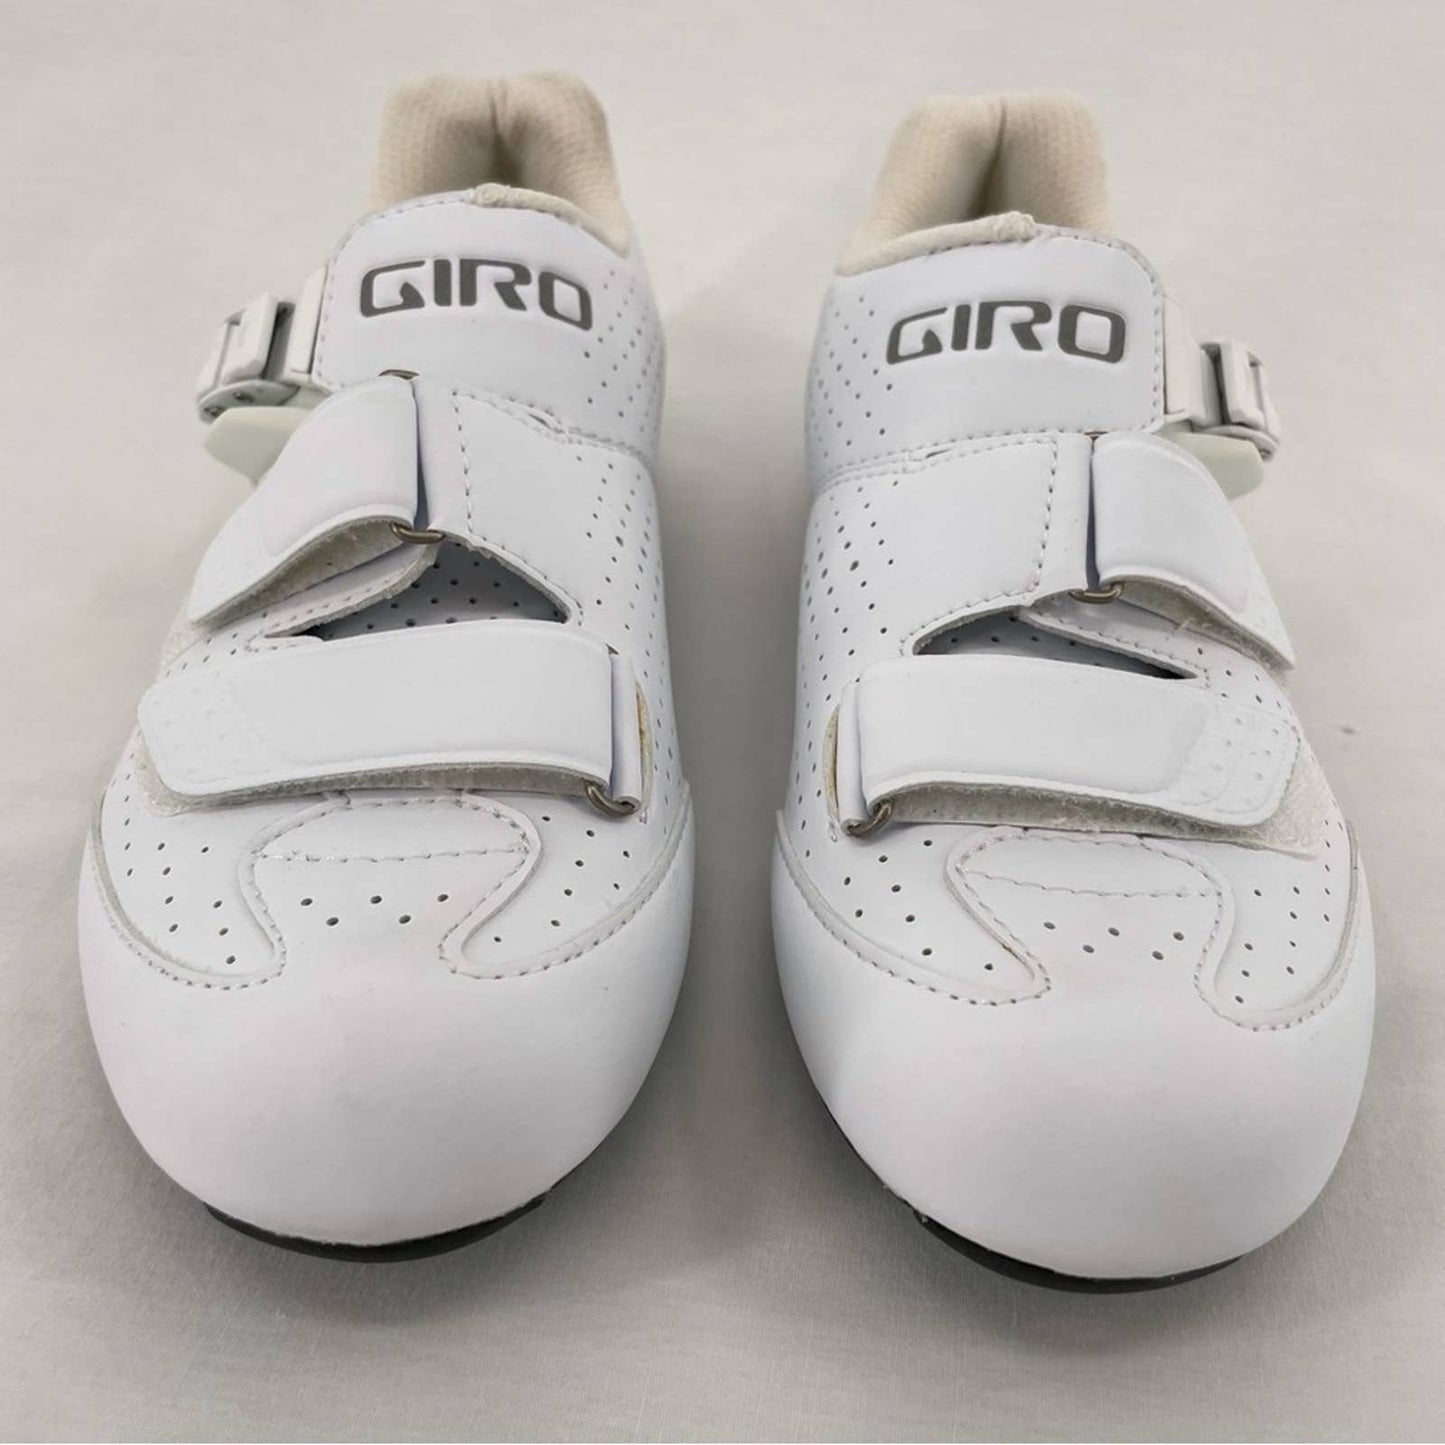 Giro ESPADA E70 Road Cycling Shoe Matte White Delta 3 Bolt Style Peloton Size 42.5